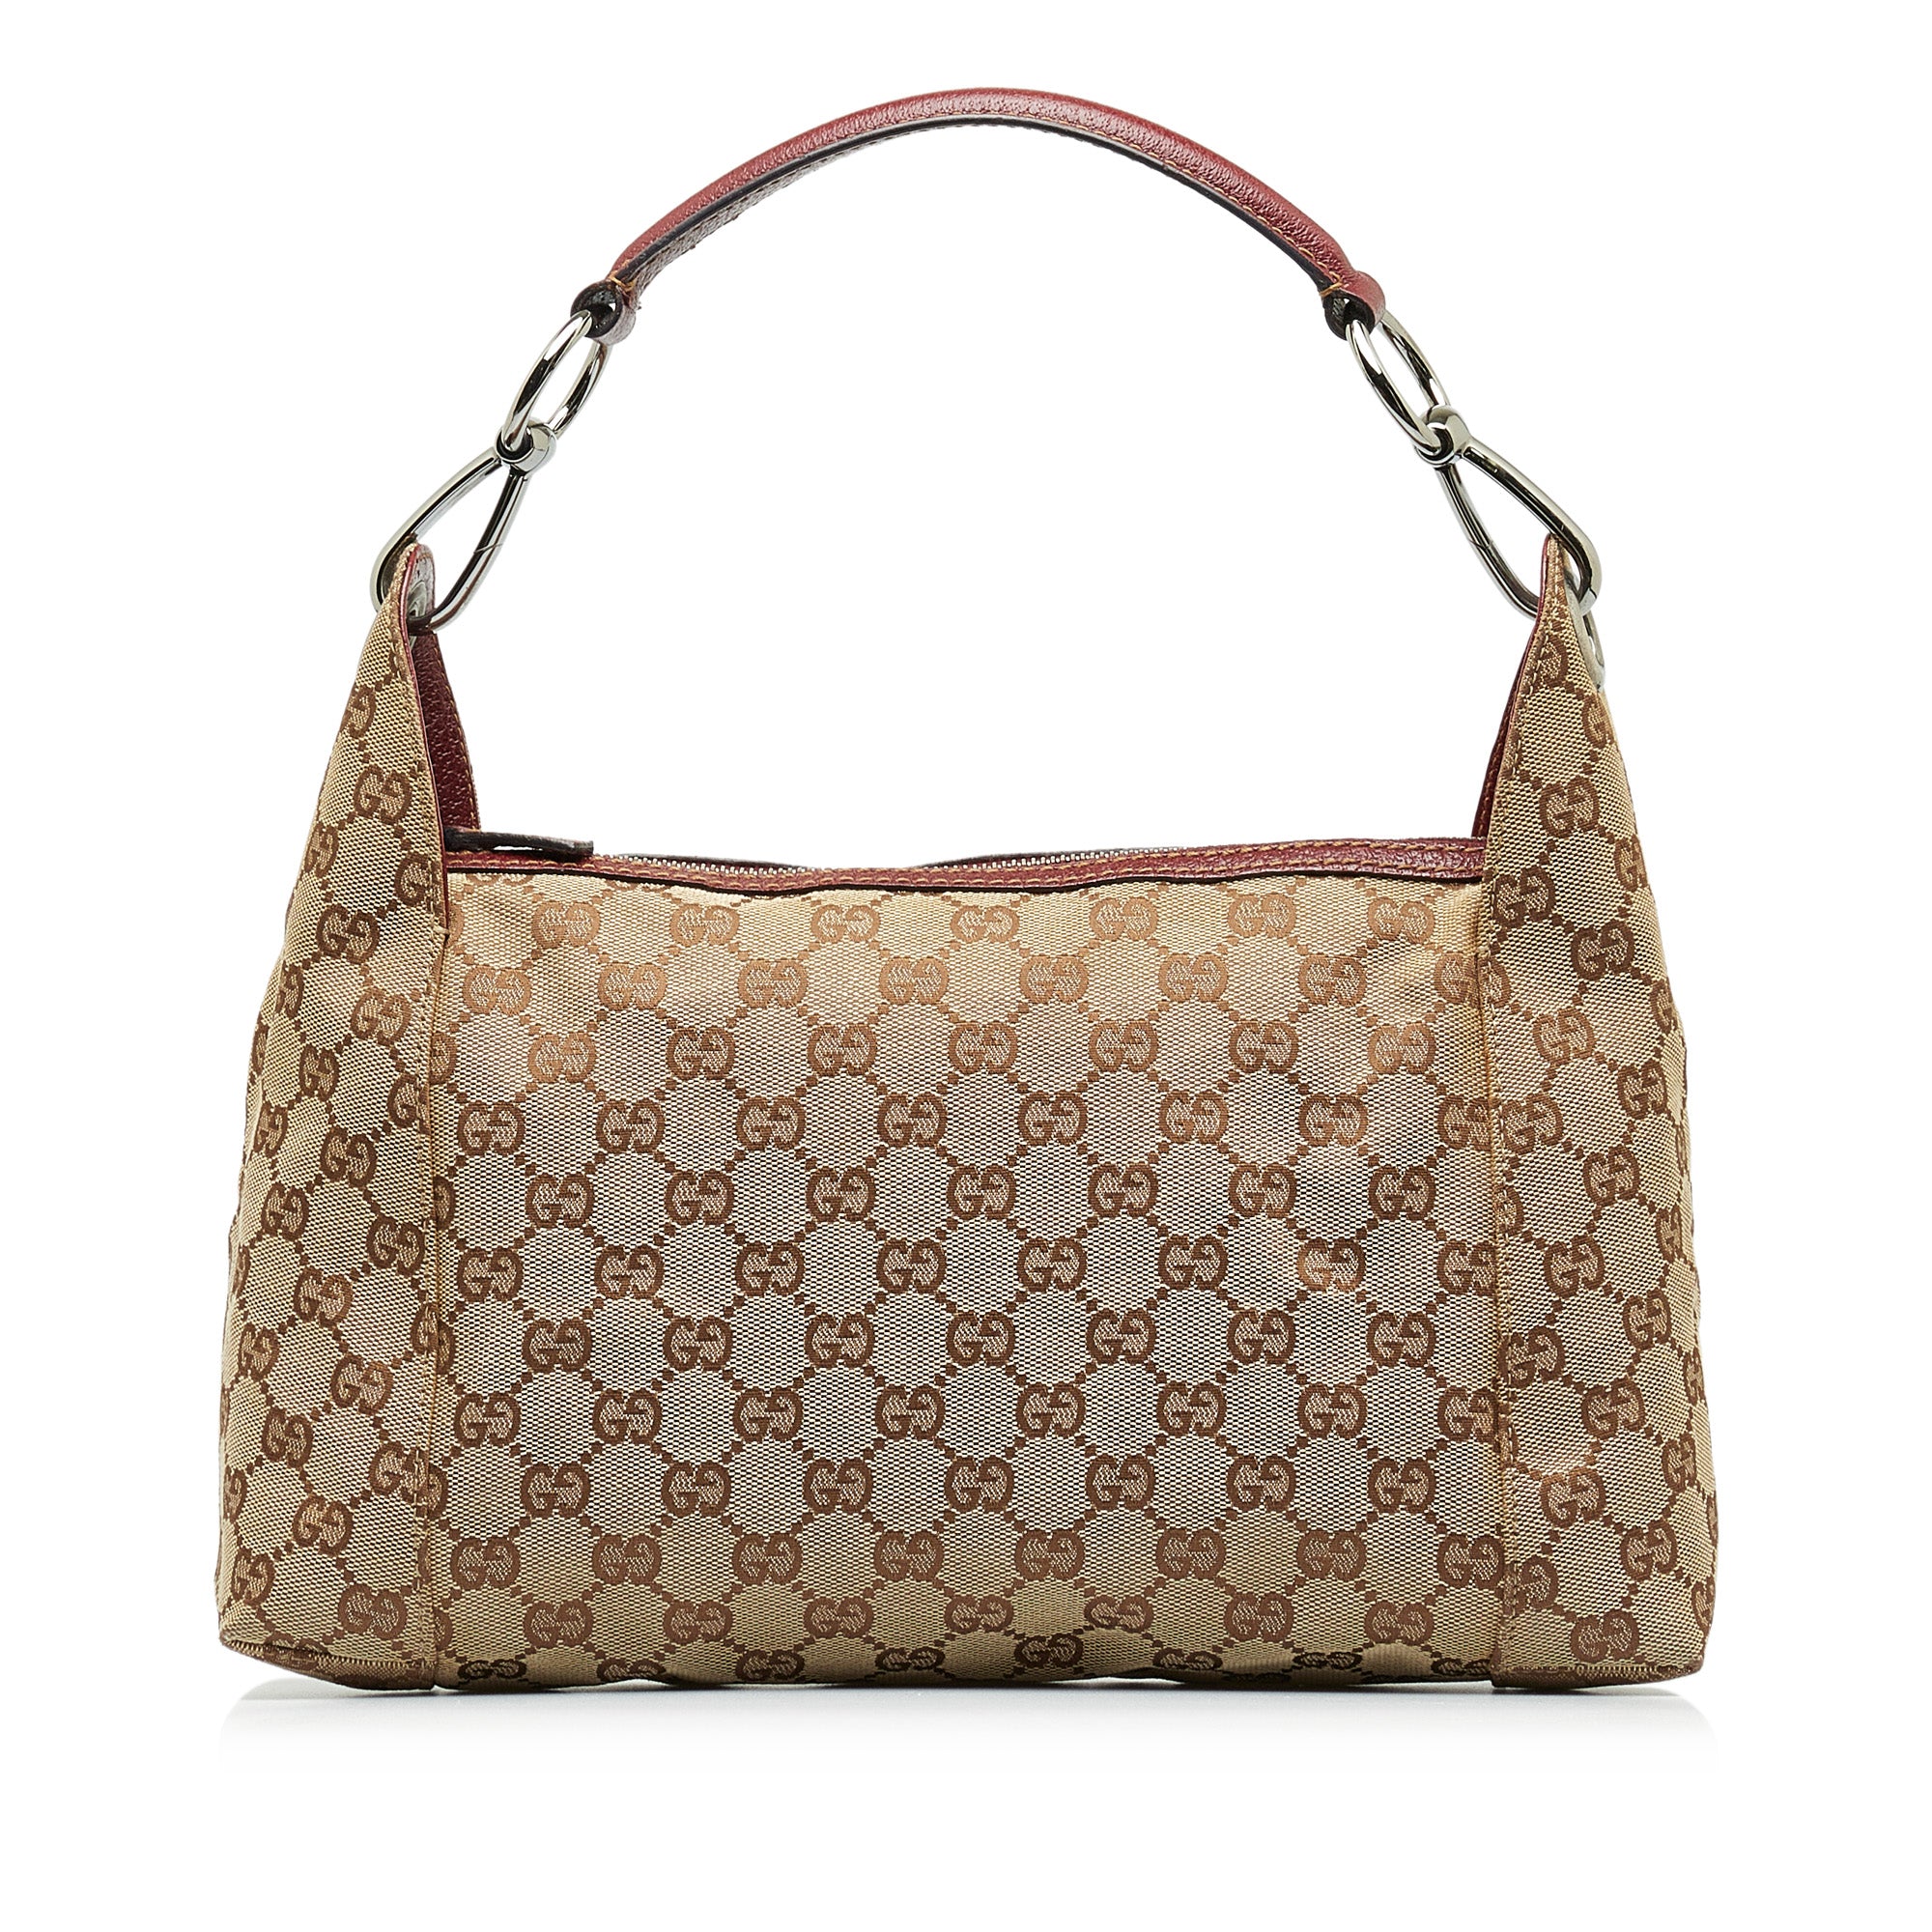 GUCCI Purse | Gucci purse, Purses, Purses and handbags